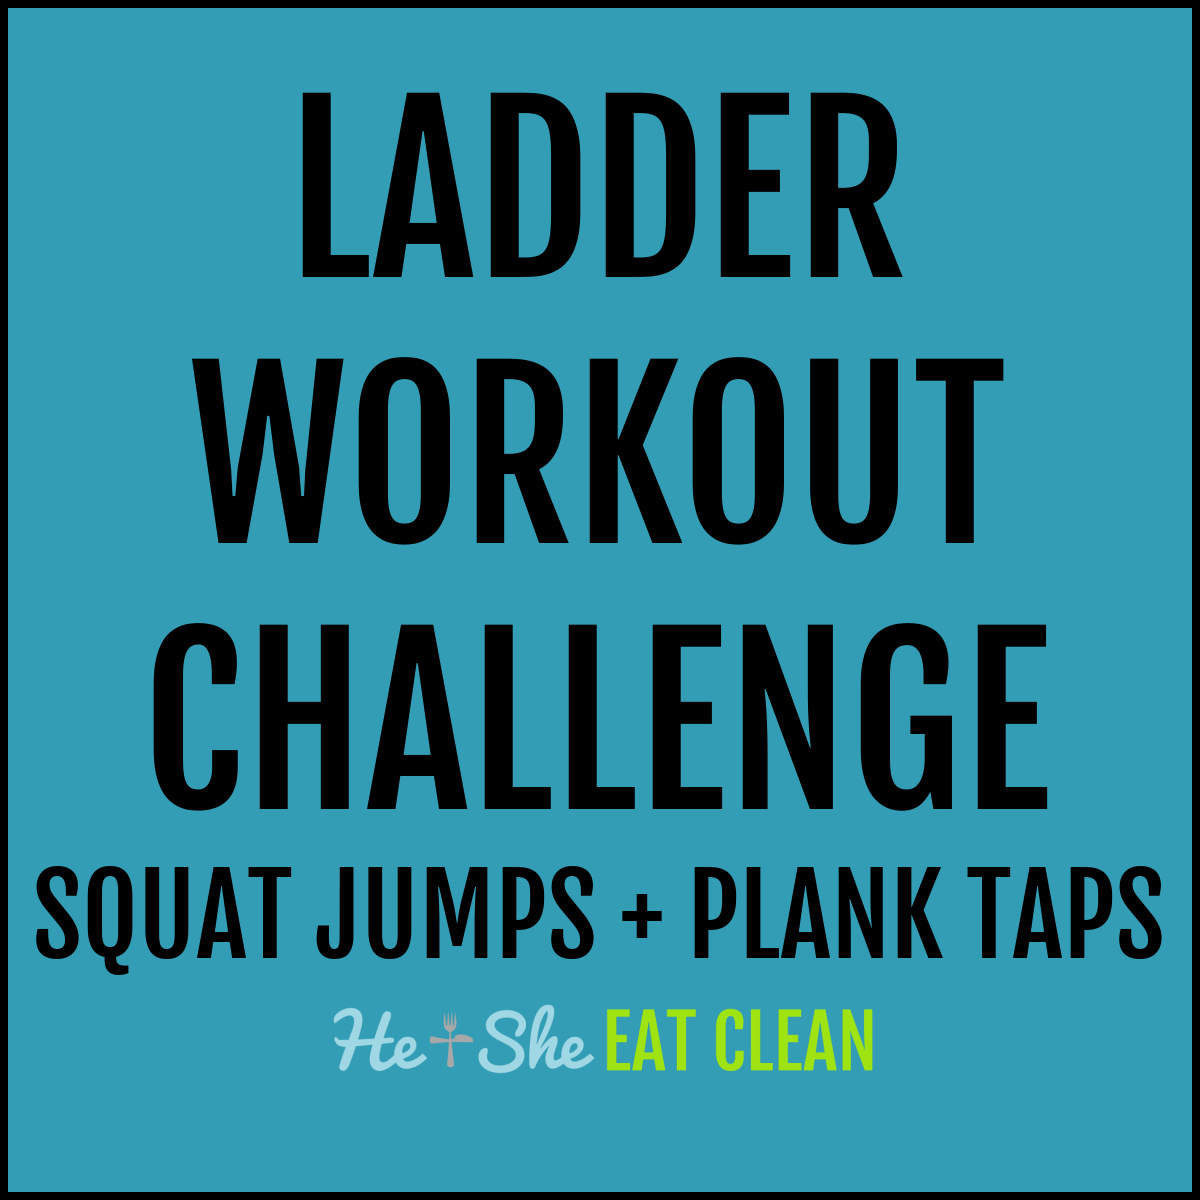 text reads ladder workout challenge: squat jumps + plank taps